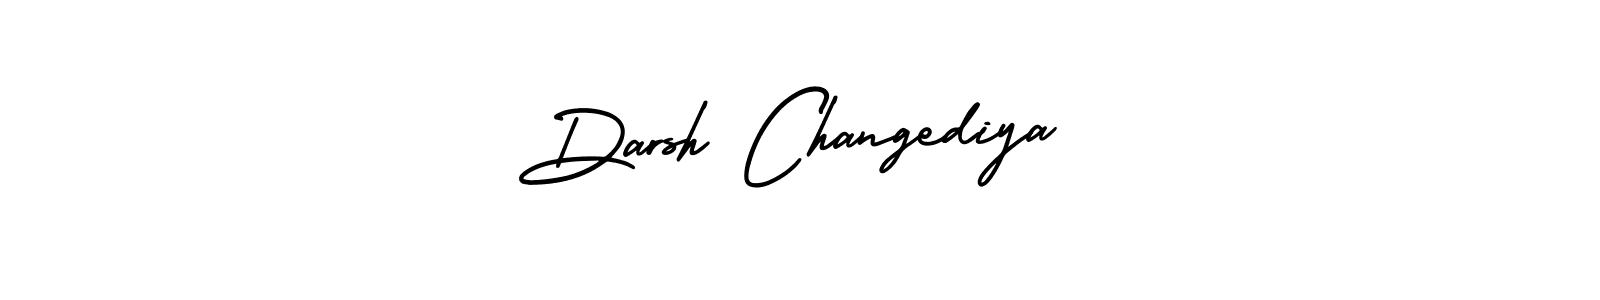 How to Draw Darsh Changediya signature style? AmerikaSignatureDemo-Regular is a latest design signature styles for name Darsh Changediya. Darsh Changediya signature style 3 images and pictures png